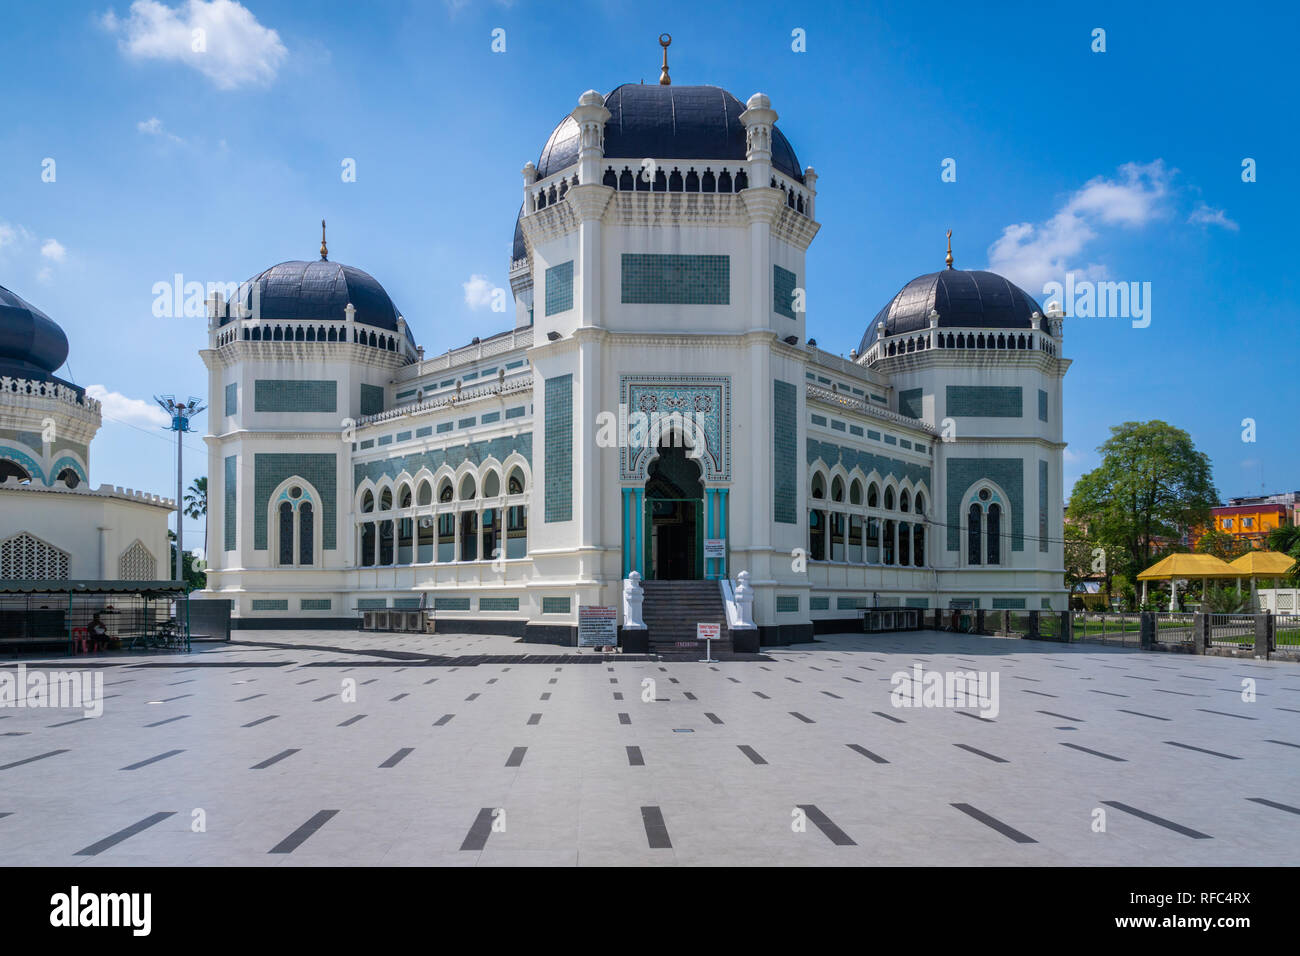 Medan, Indonesia - January 2018: Great Mosque of Medan or Masjid Raya Al Mashun is a mosque located in Medan, Indonesia. Stock Photo